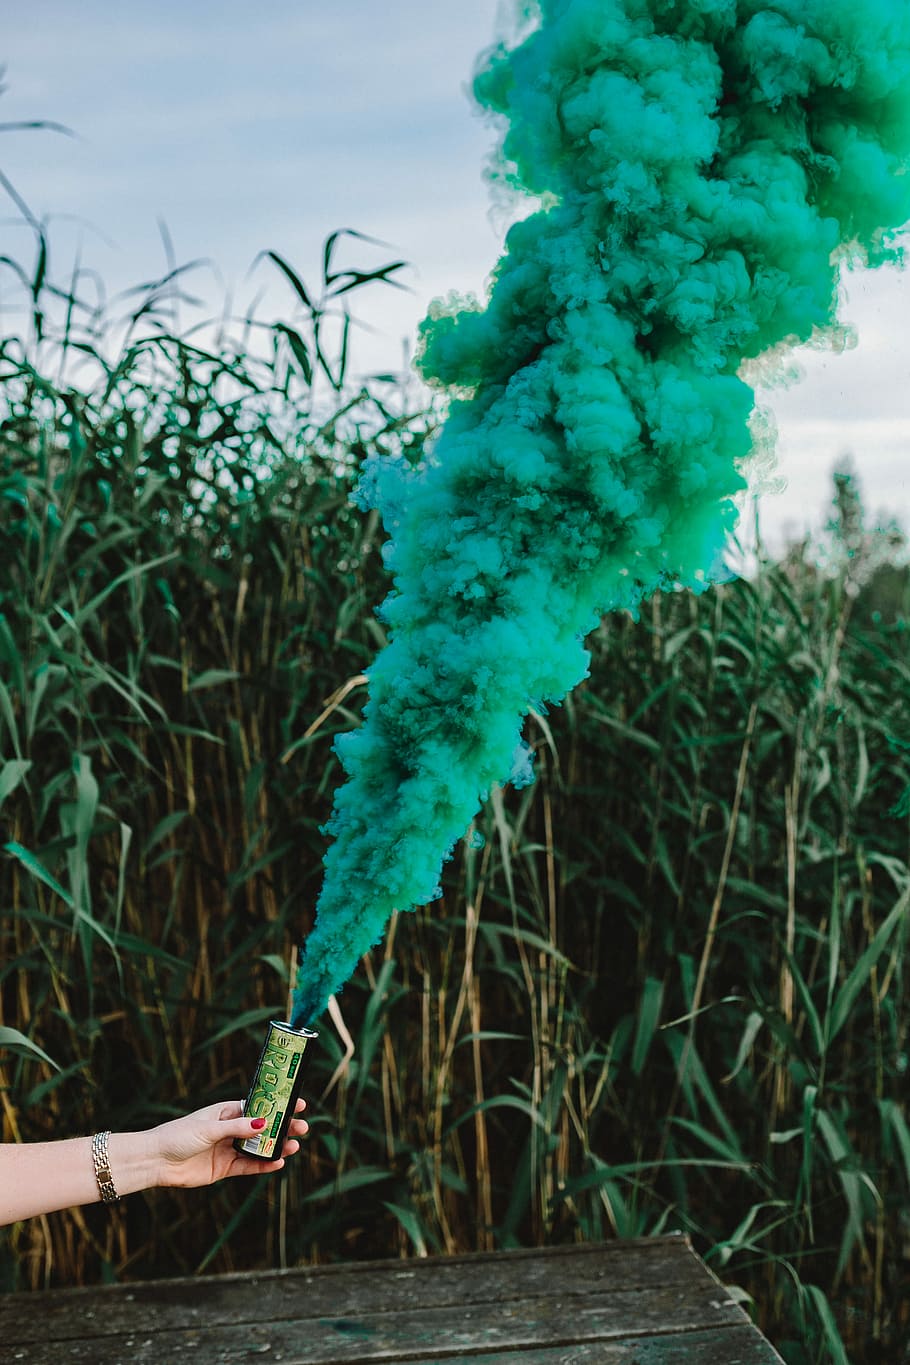 green smoke bomb, smoke bomb, abstract, background, outdoor, green smoke, green, nature, human Hand, outdoors